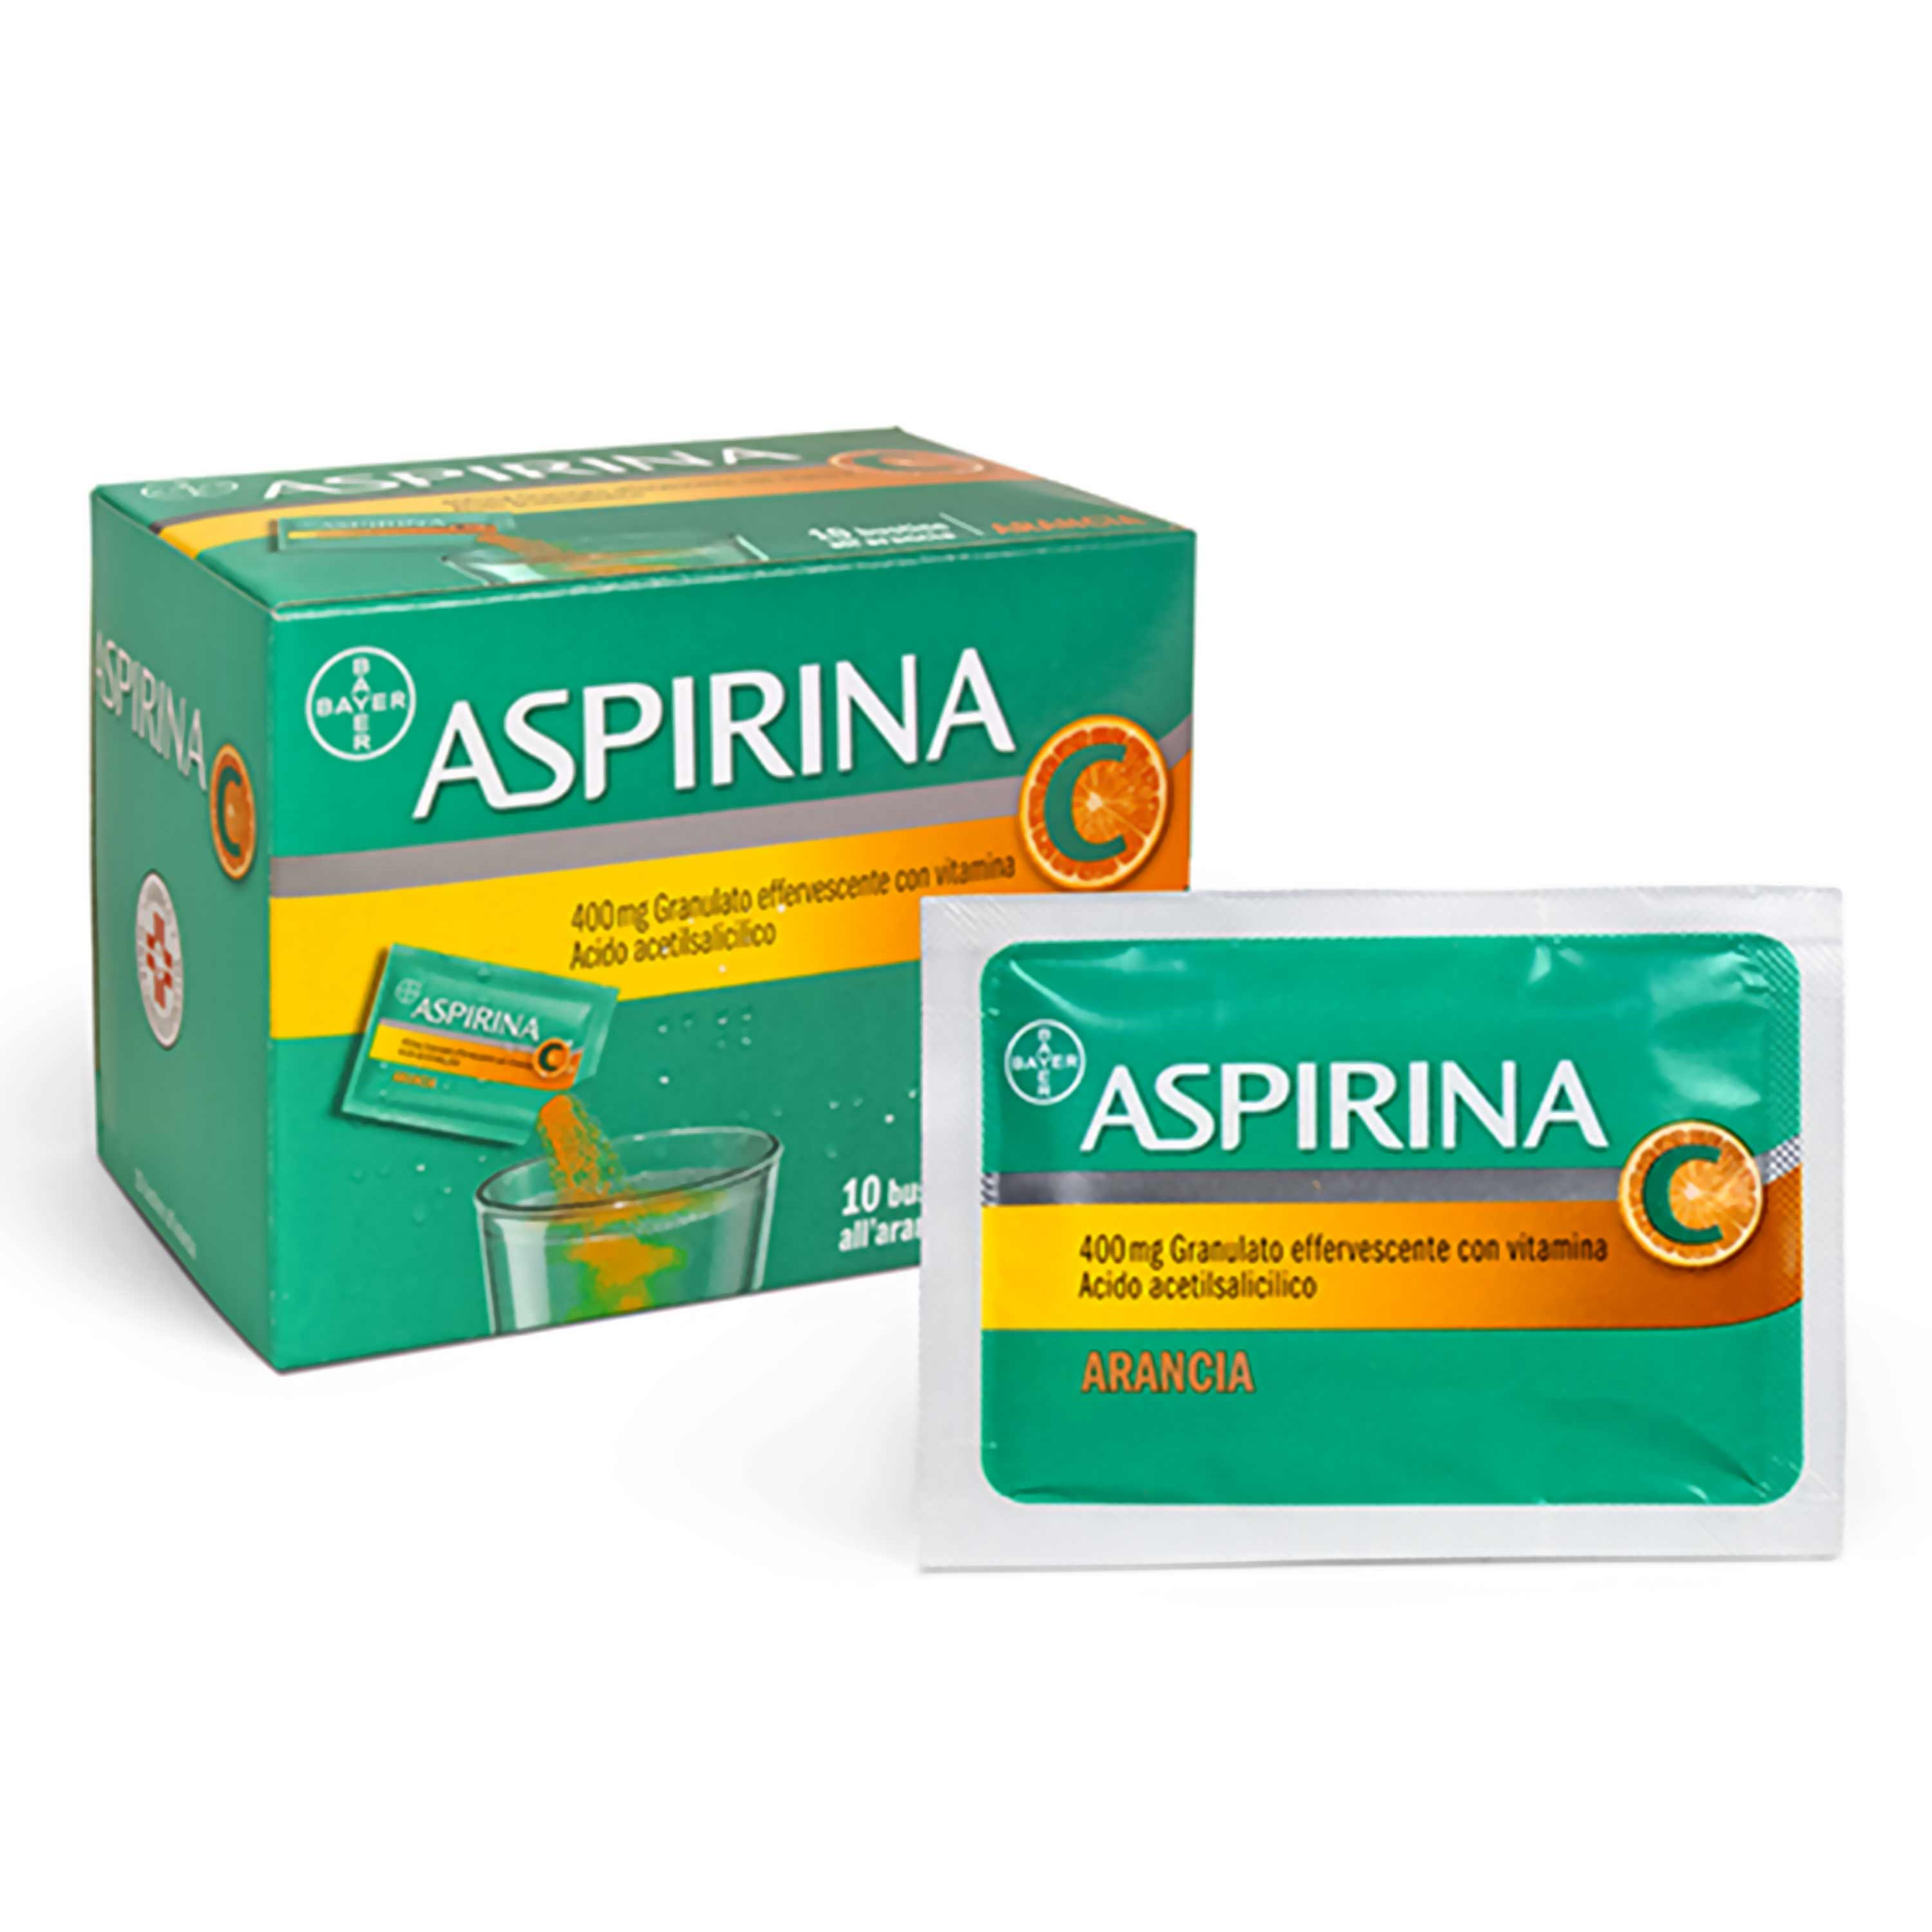 Aspirina C Raffreddore Influenza 400mg Vitamina C 10 Bustine Arancia - Aspirina C Raffreddore Influenza 400mg Vitamina C 10 Bustine Arancia